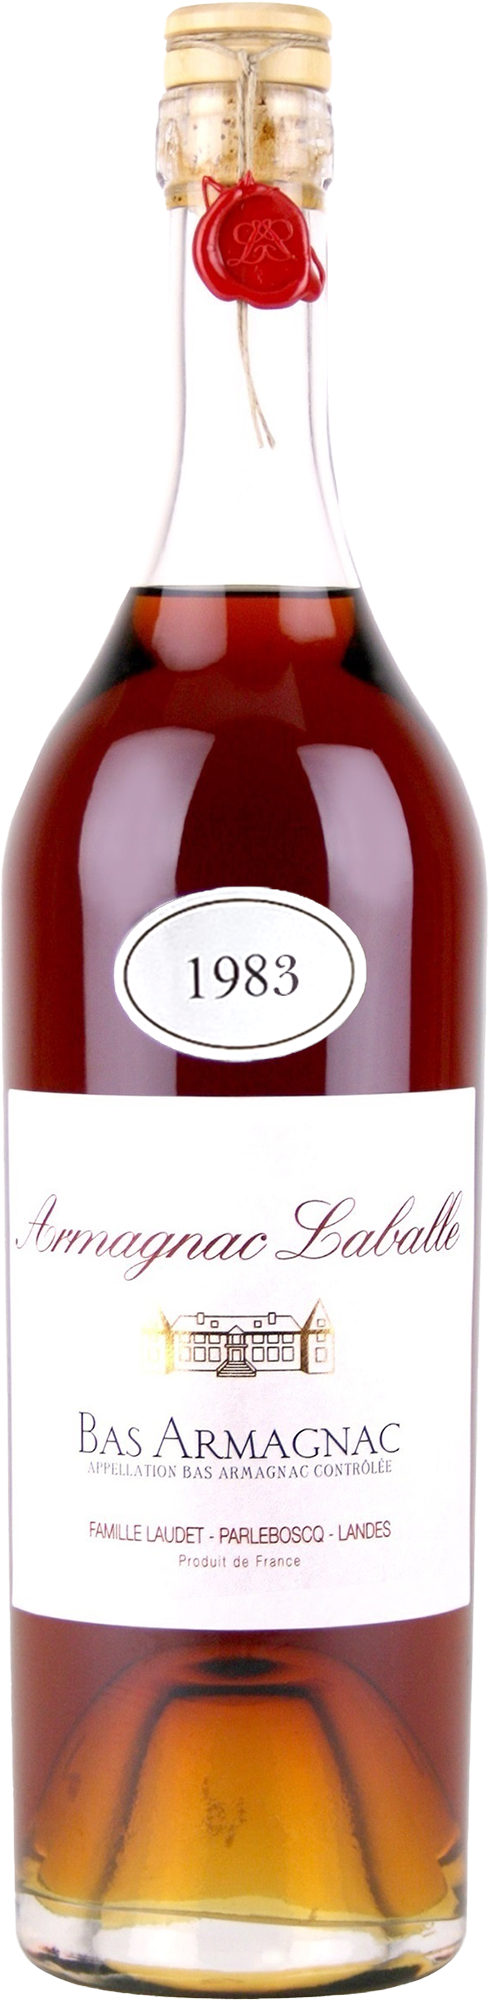 Château Laballe Bas Armagnac 1983